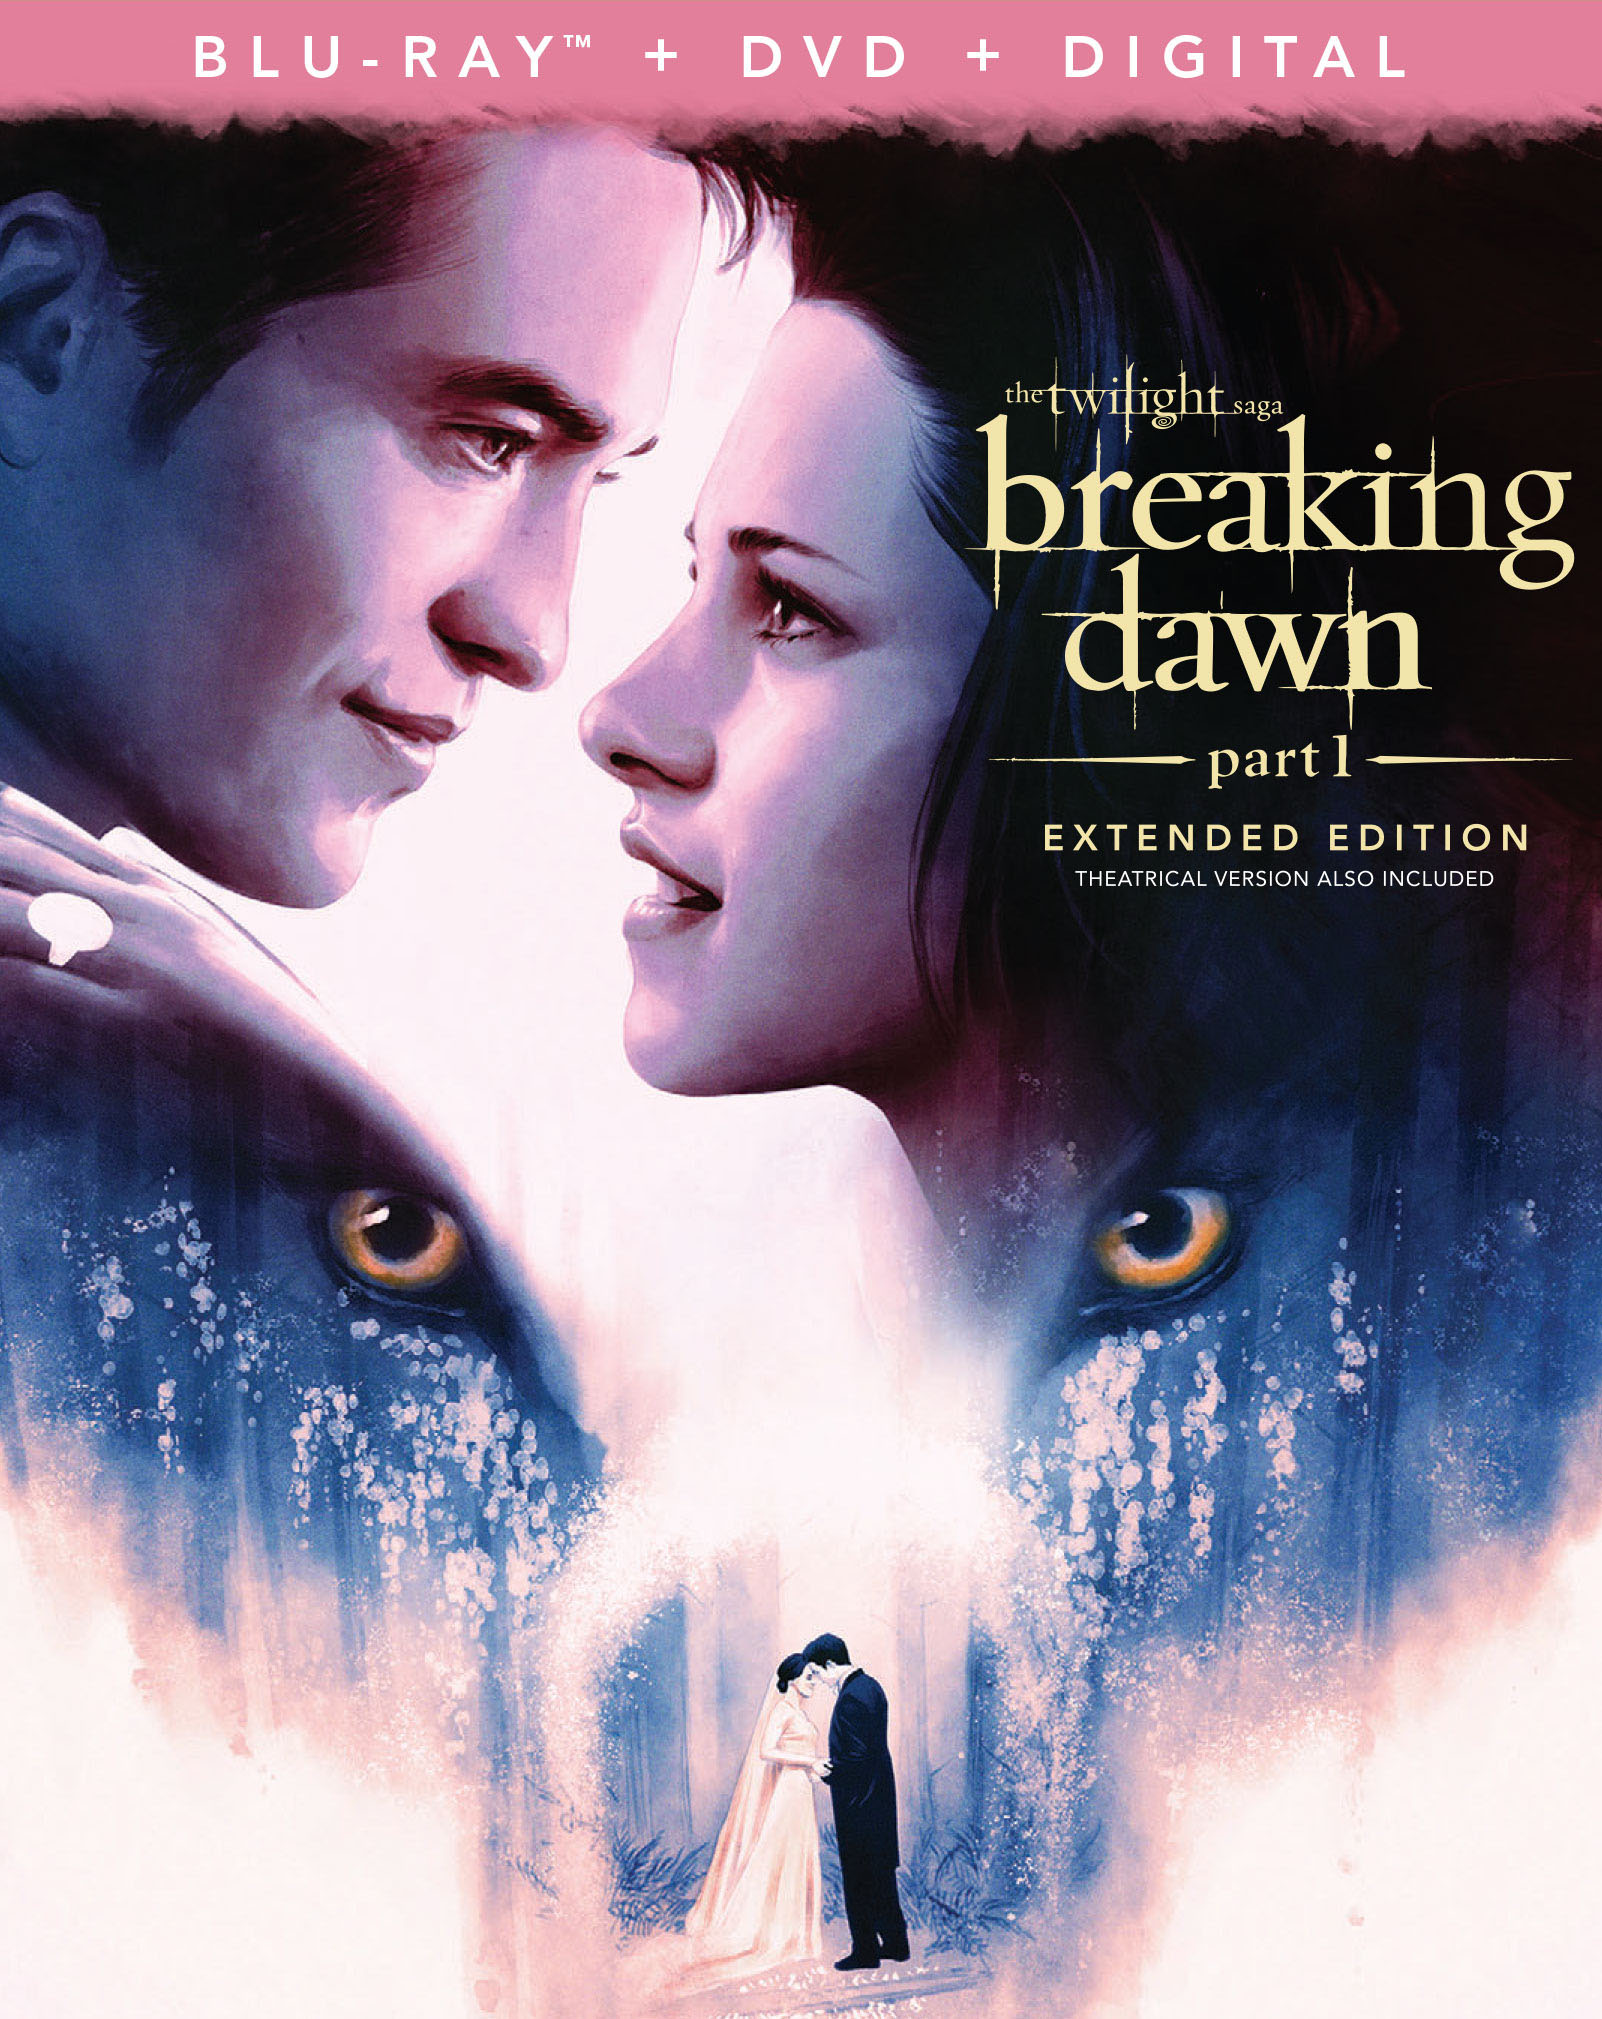 twilight breaking dawn part 1 poster